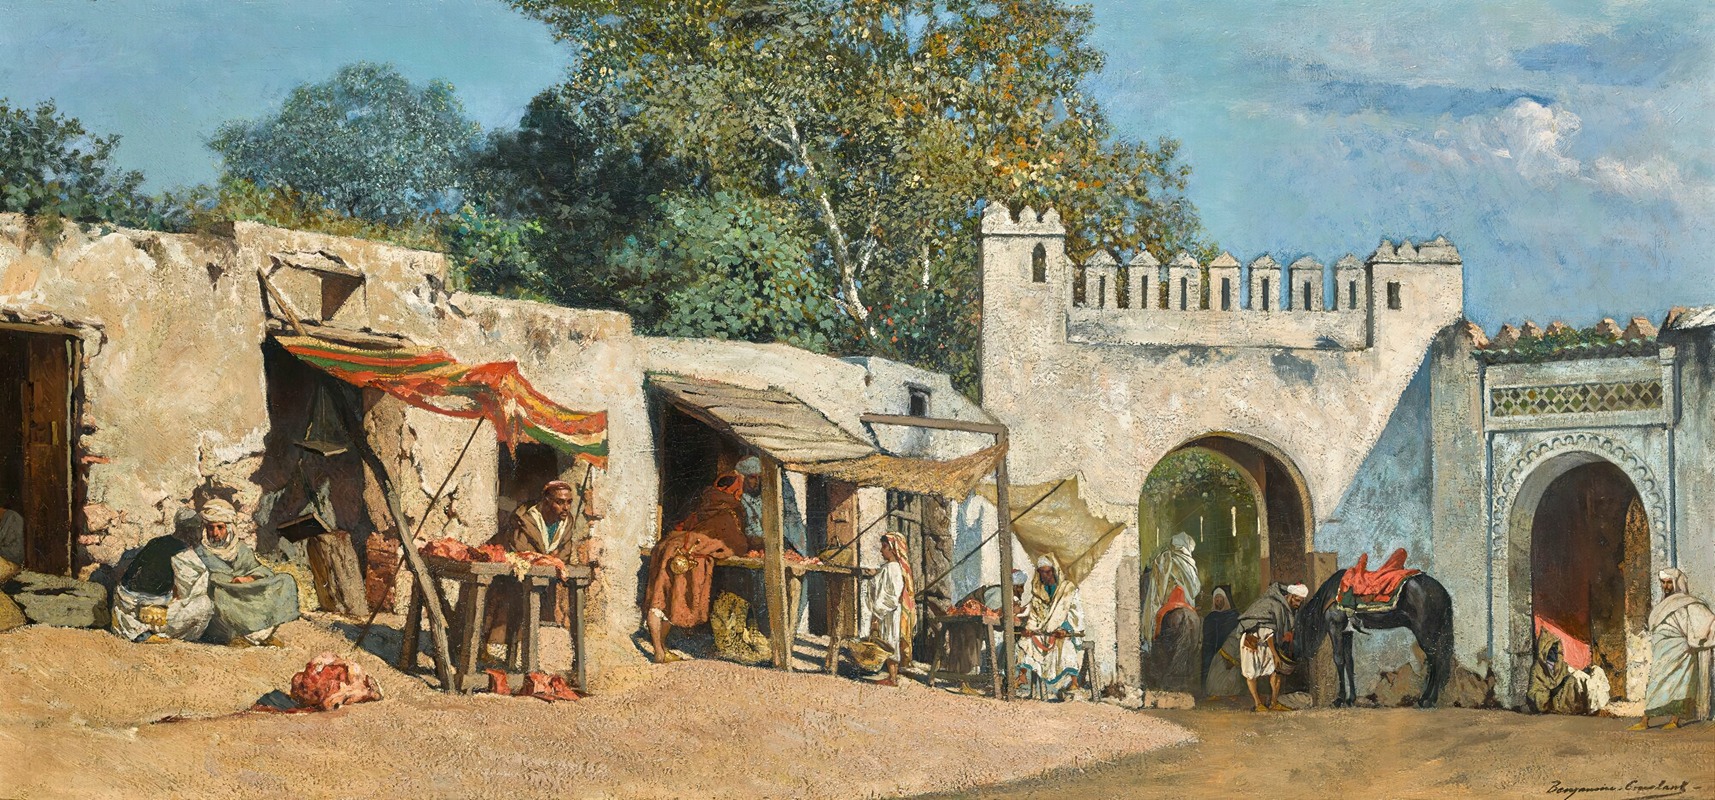 Jean-Joseph-Benjamin Constant - The Bab el Fahs gate, Tangier